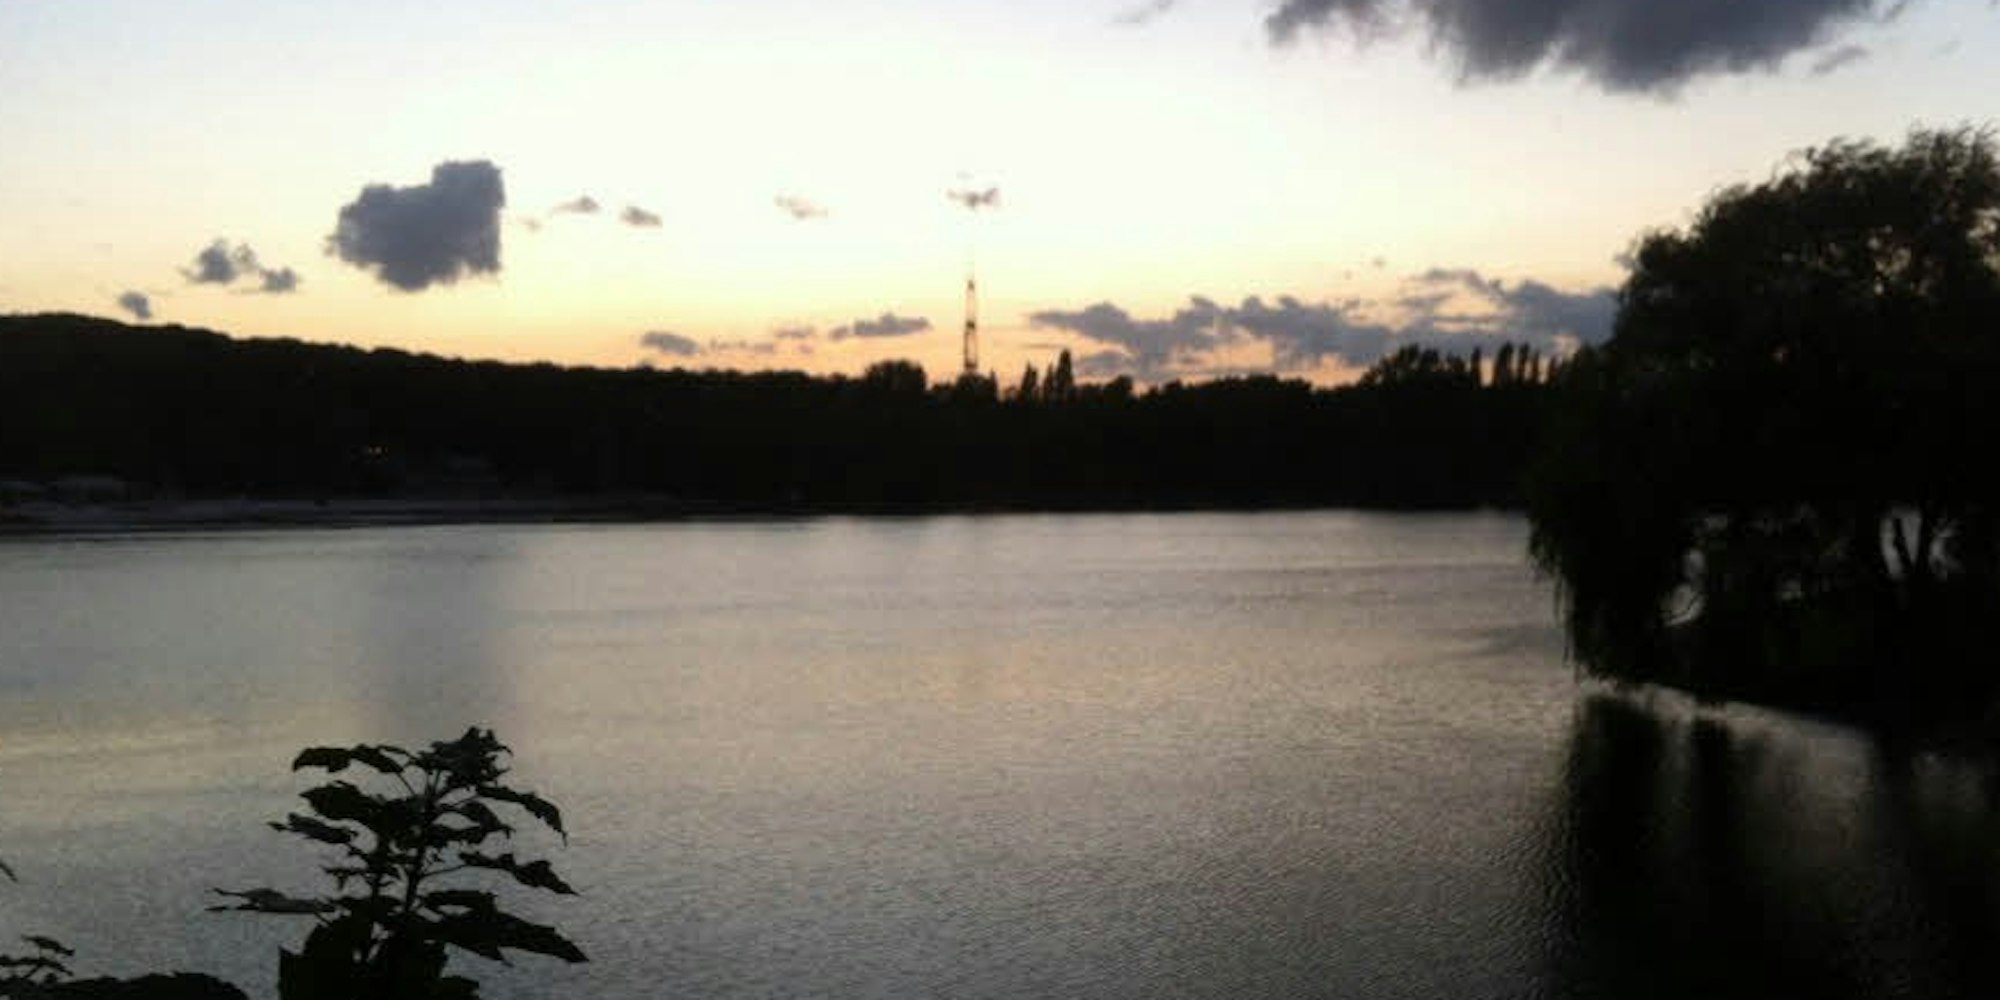 Sonnenuntergangsstimmung am Fühlinger See